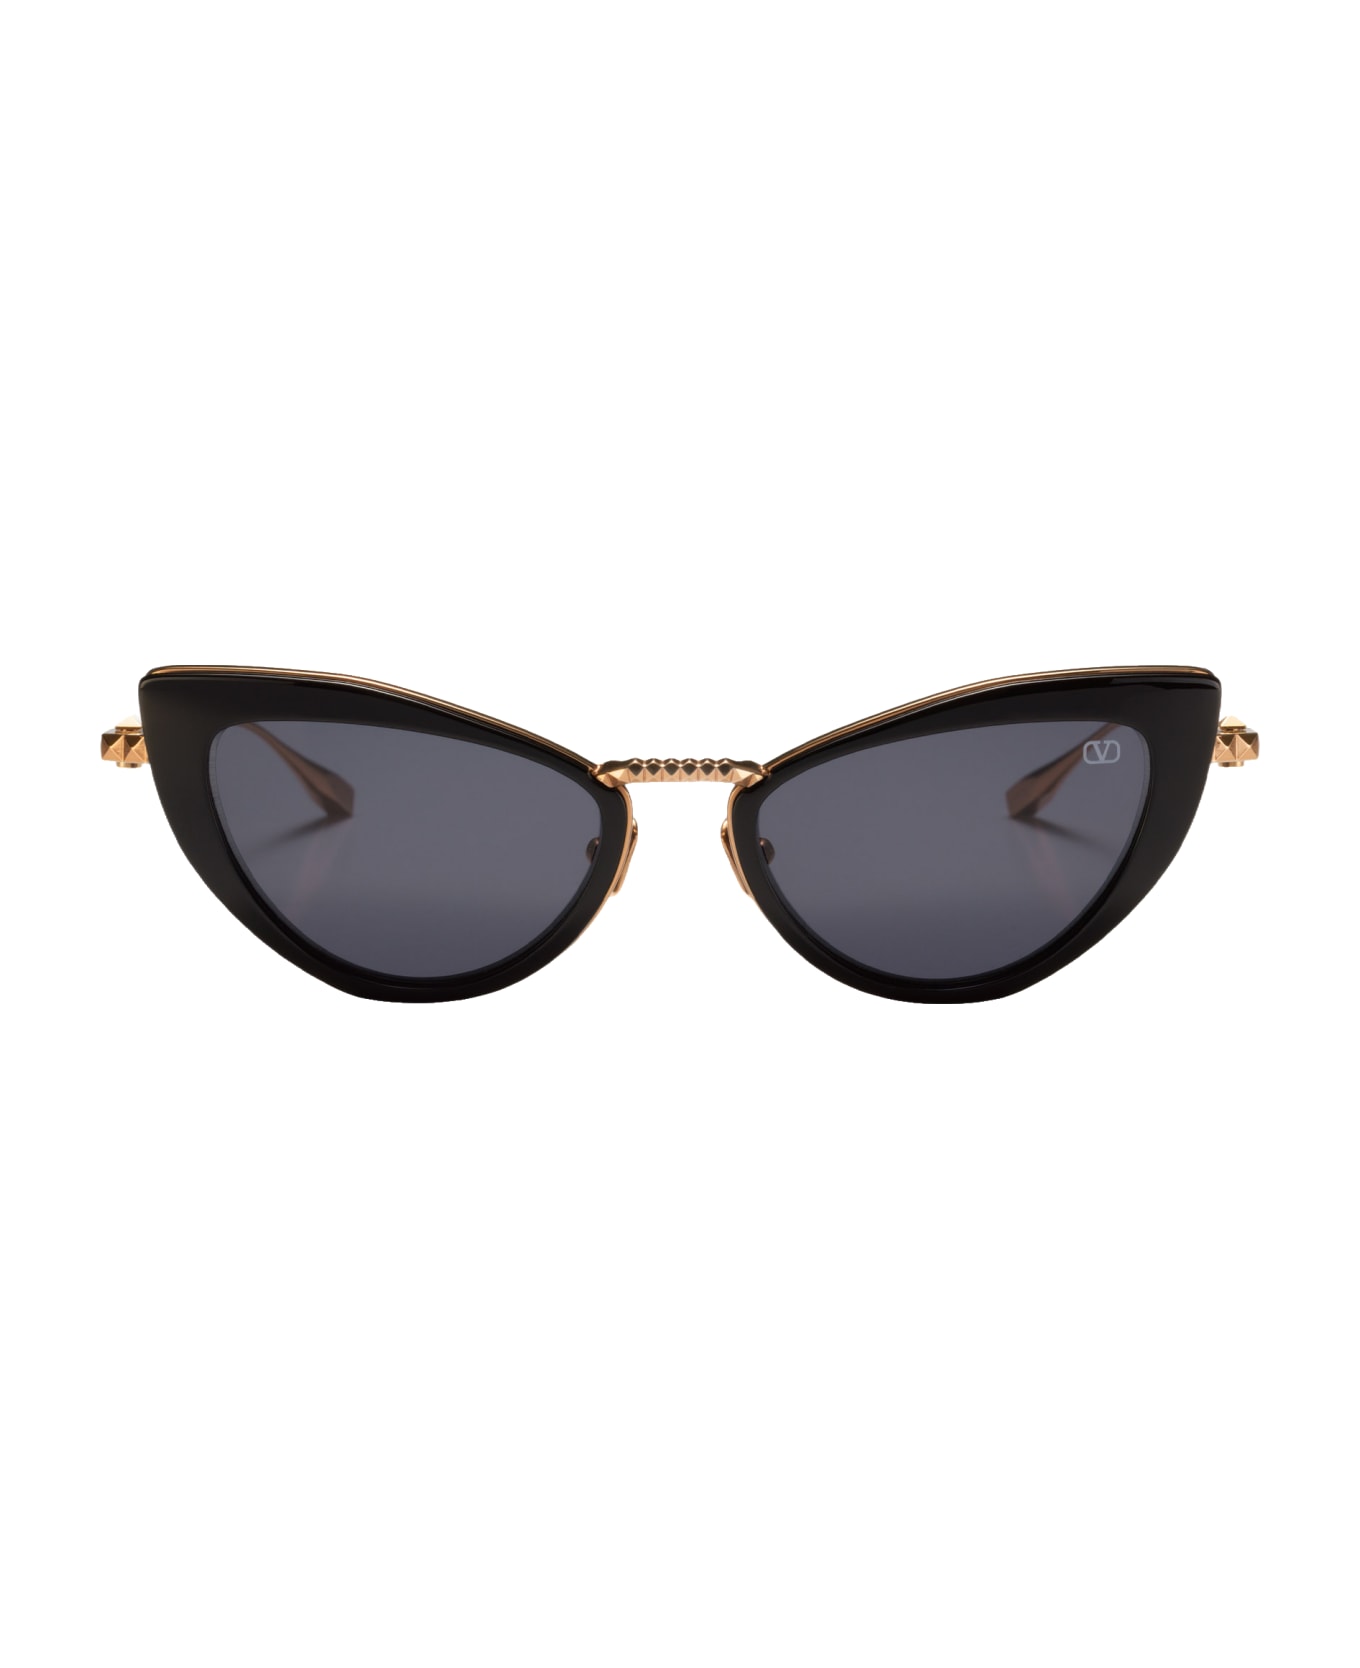 Valentino Eyewear Viii - fendi Gold / Black Sunglasses - Black/fendi gold